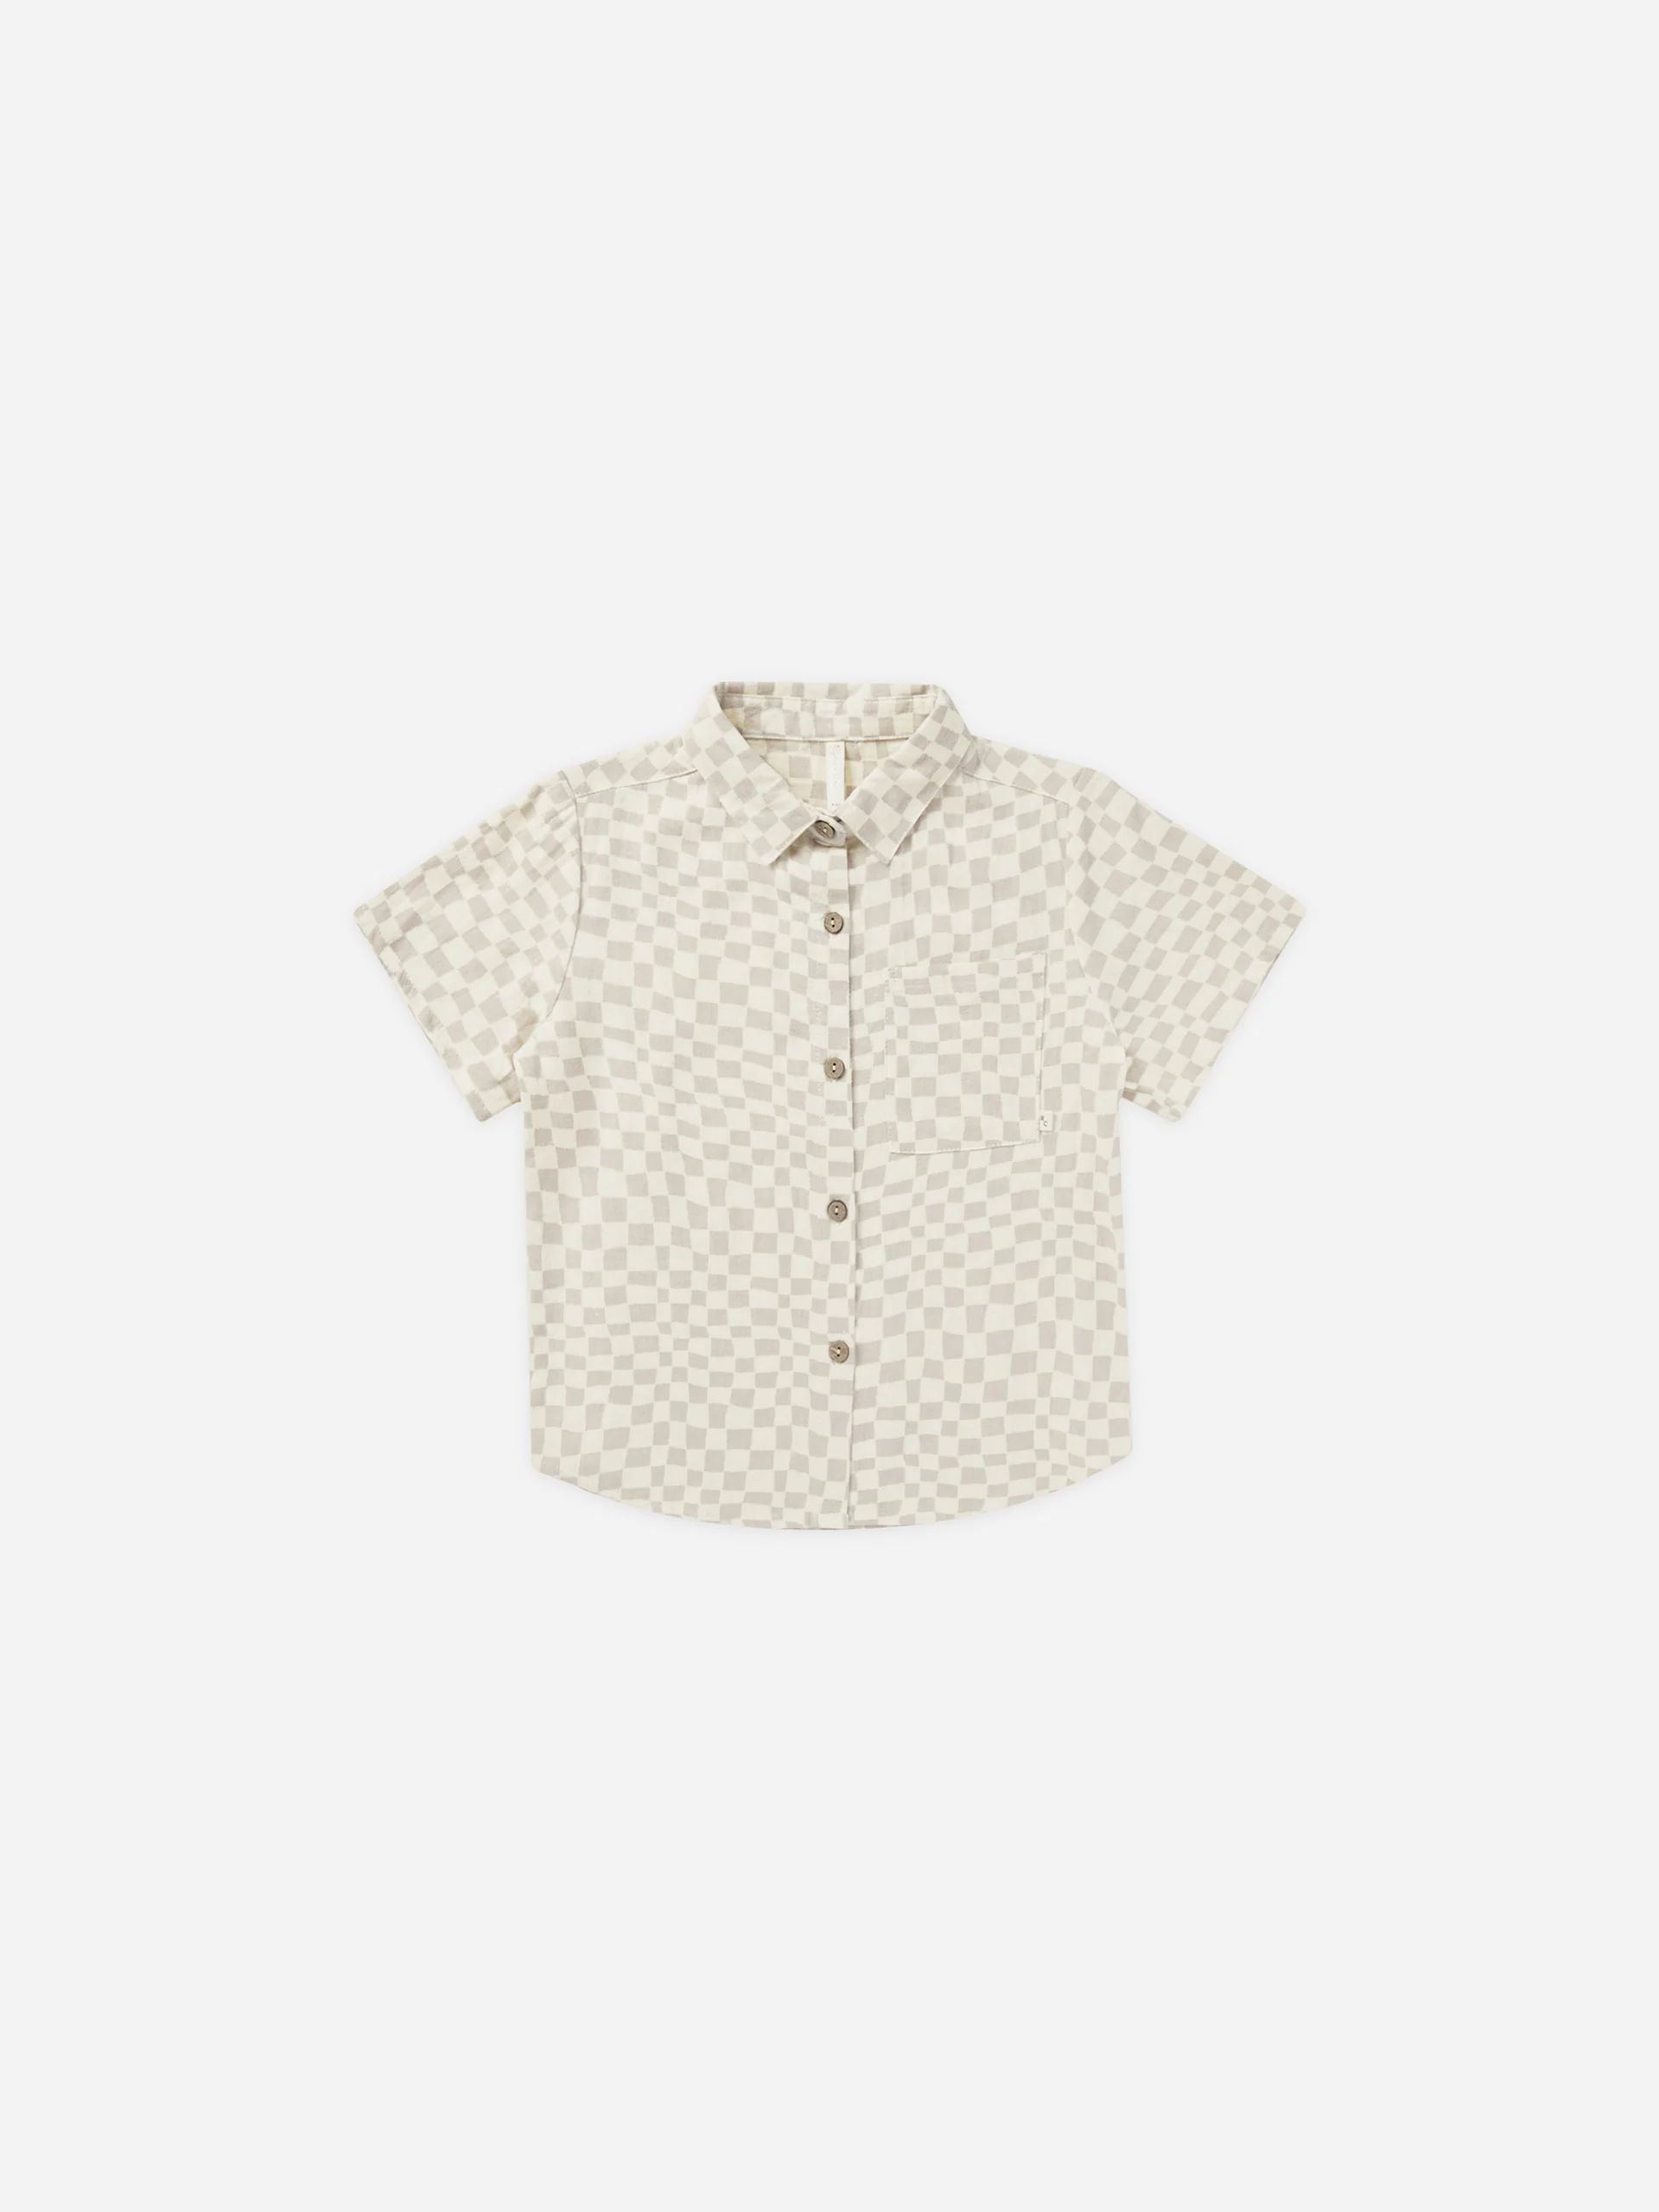 Collared Short Sleeve Shirt || Dove Check | Rylee + Cru